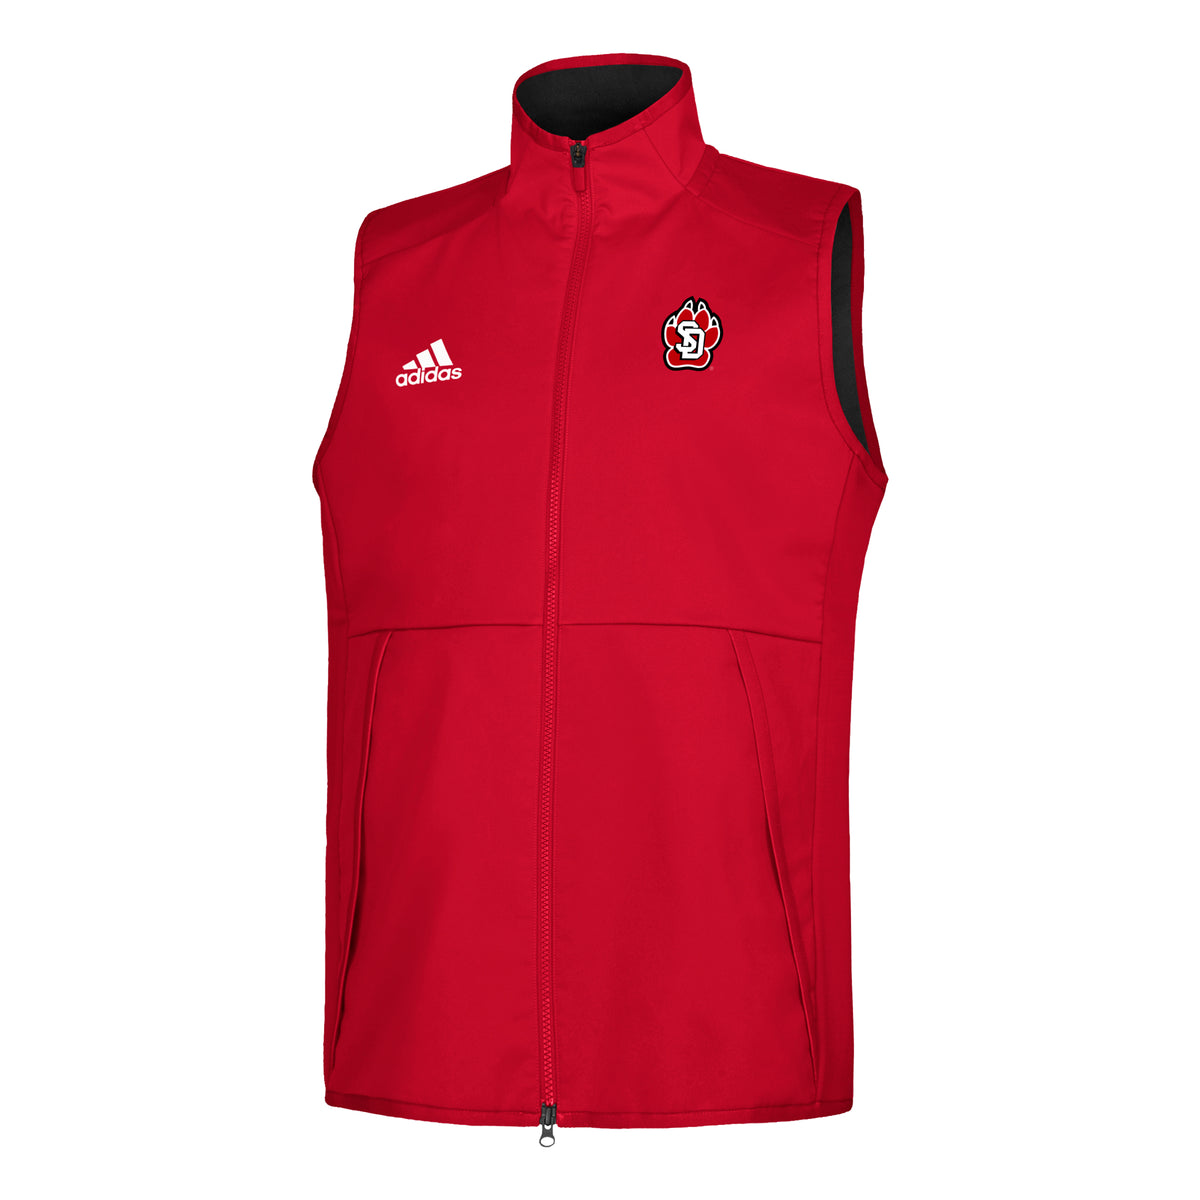 Men's Red Adidas Vest – USD Charlie's Store